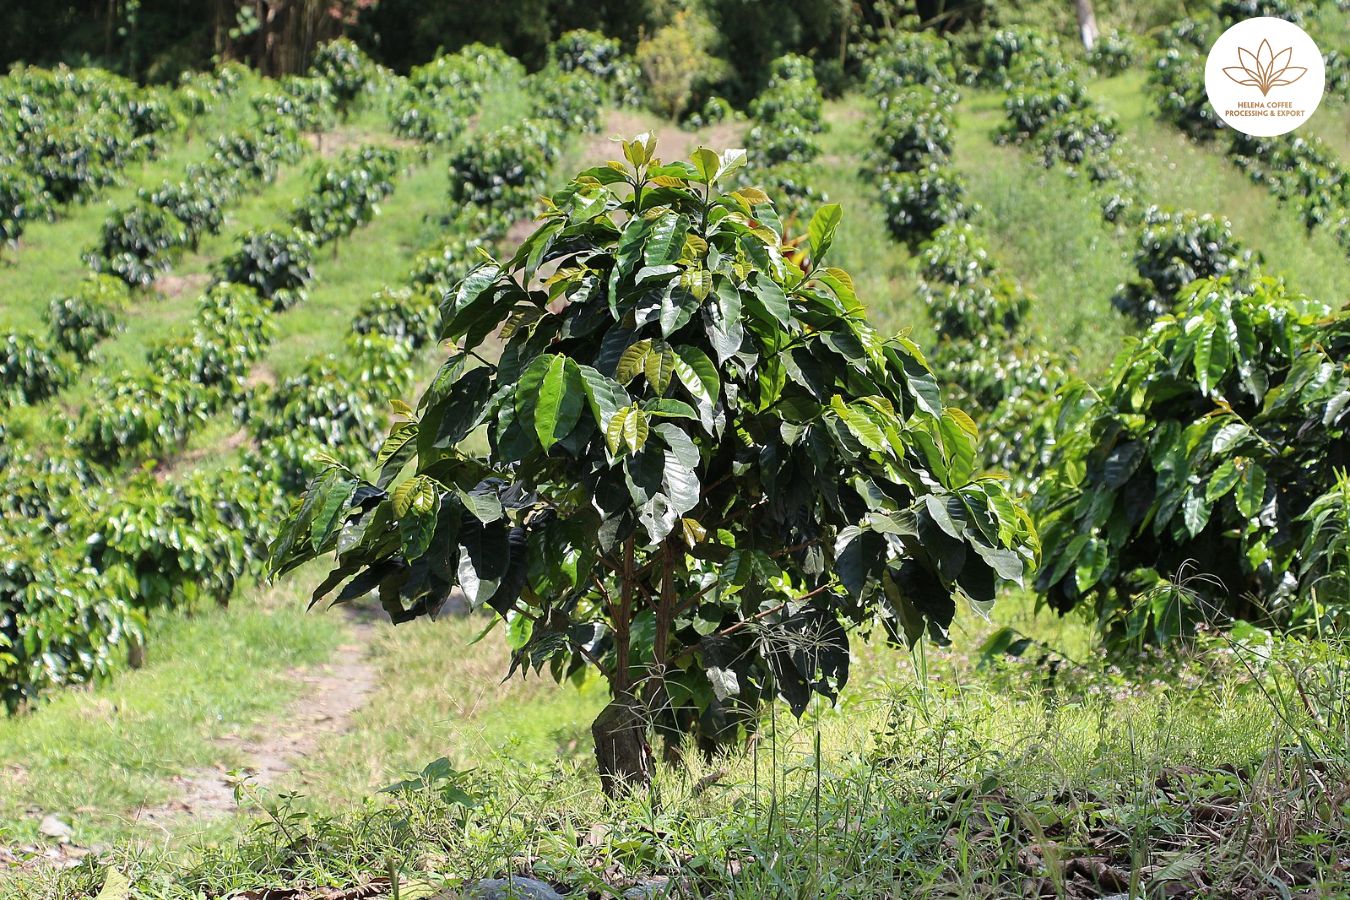 Helps coffee plants grow healthily during the rainy season